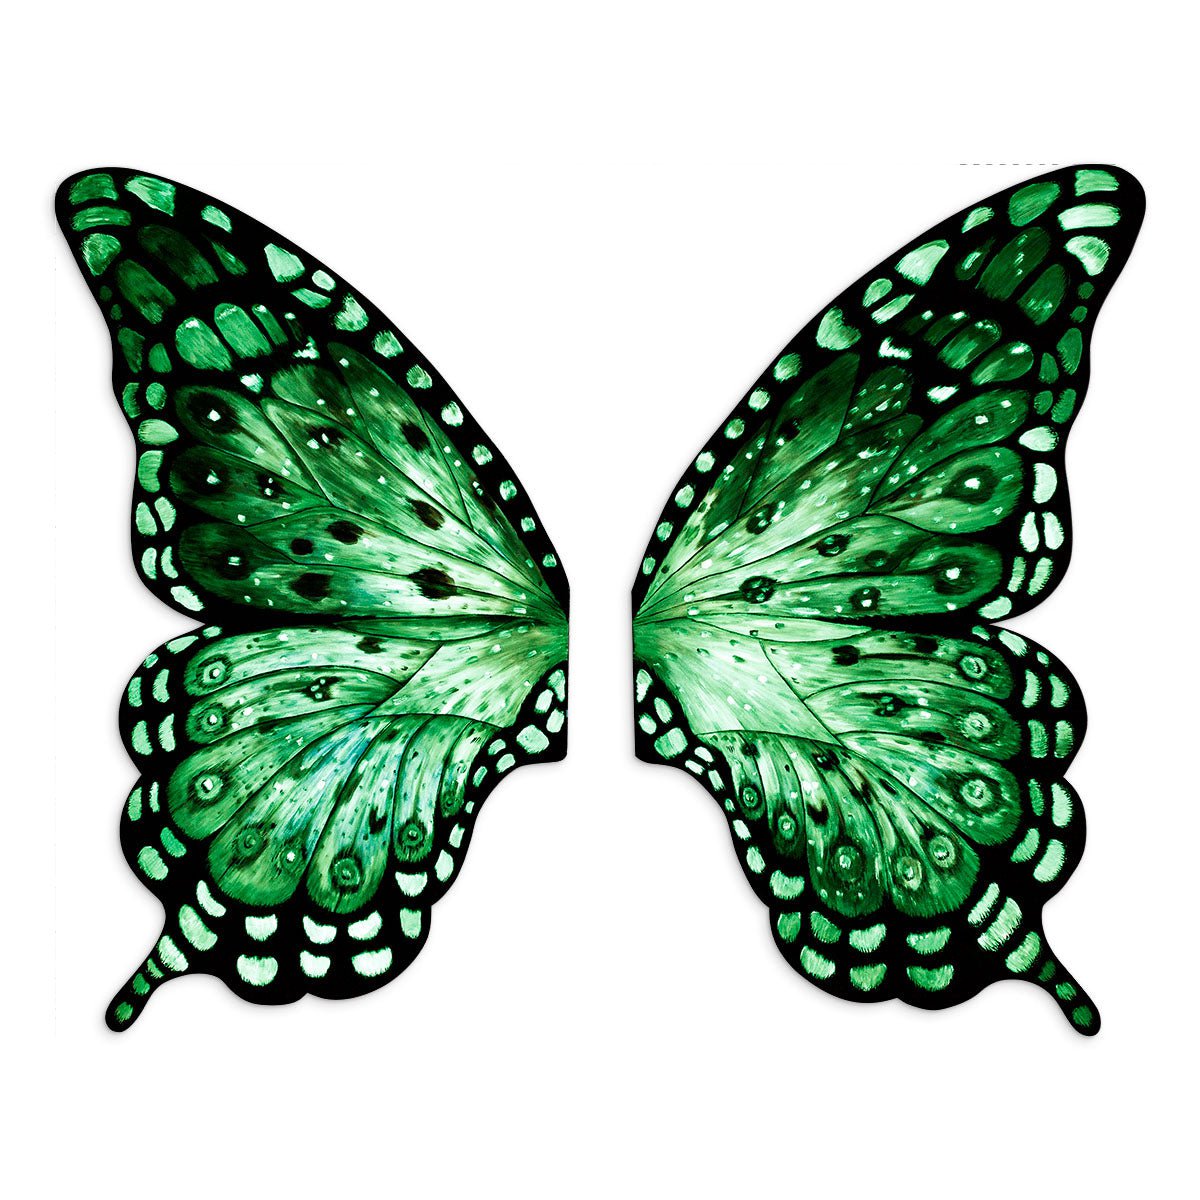 Social Butterfly - Original Becky Smith Framed